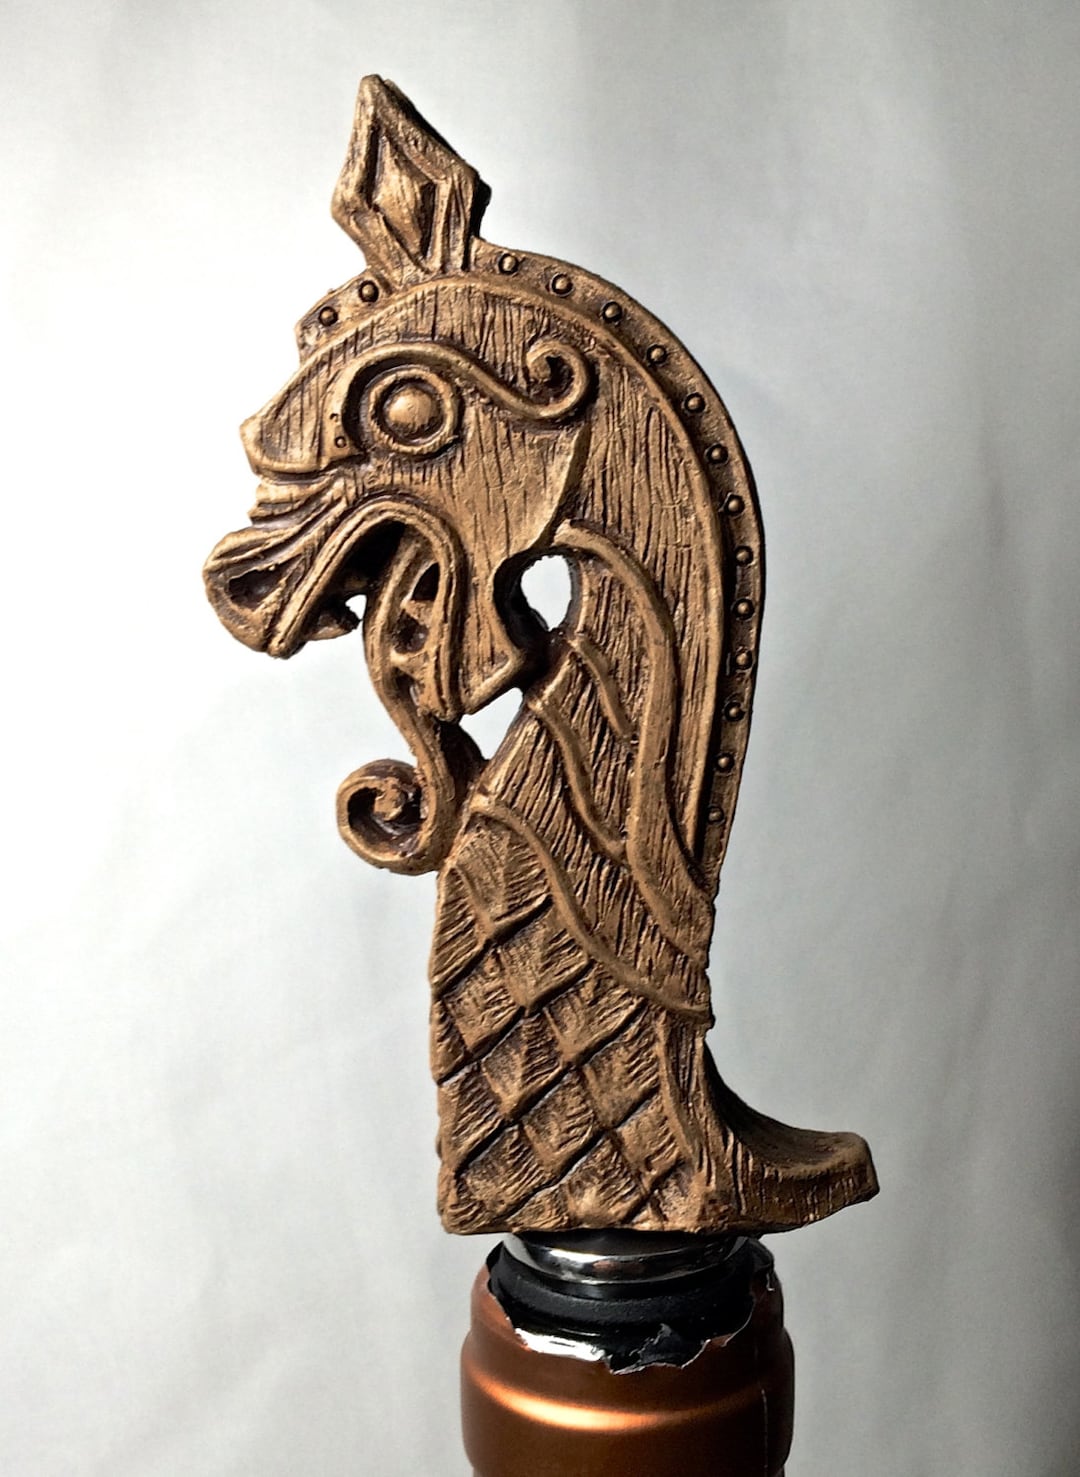 viking ship dragon head template